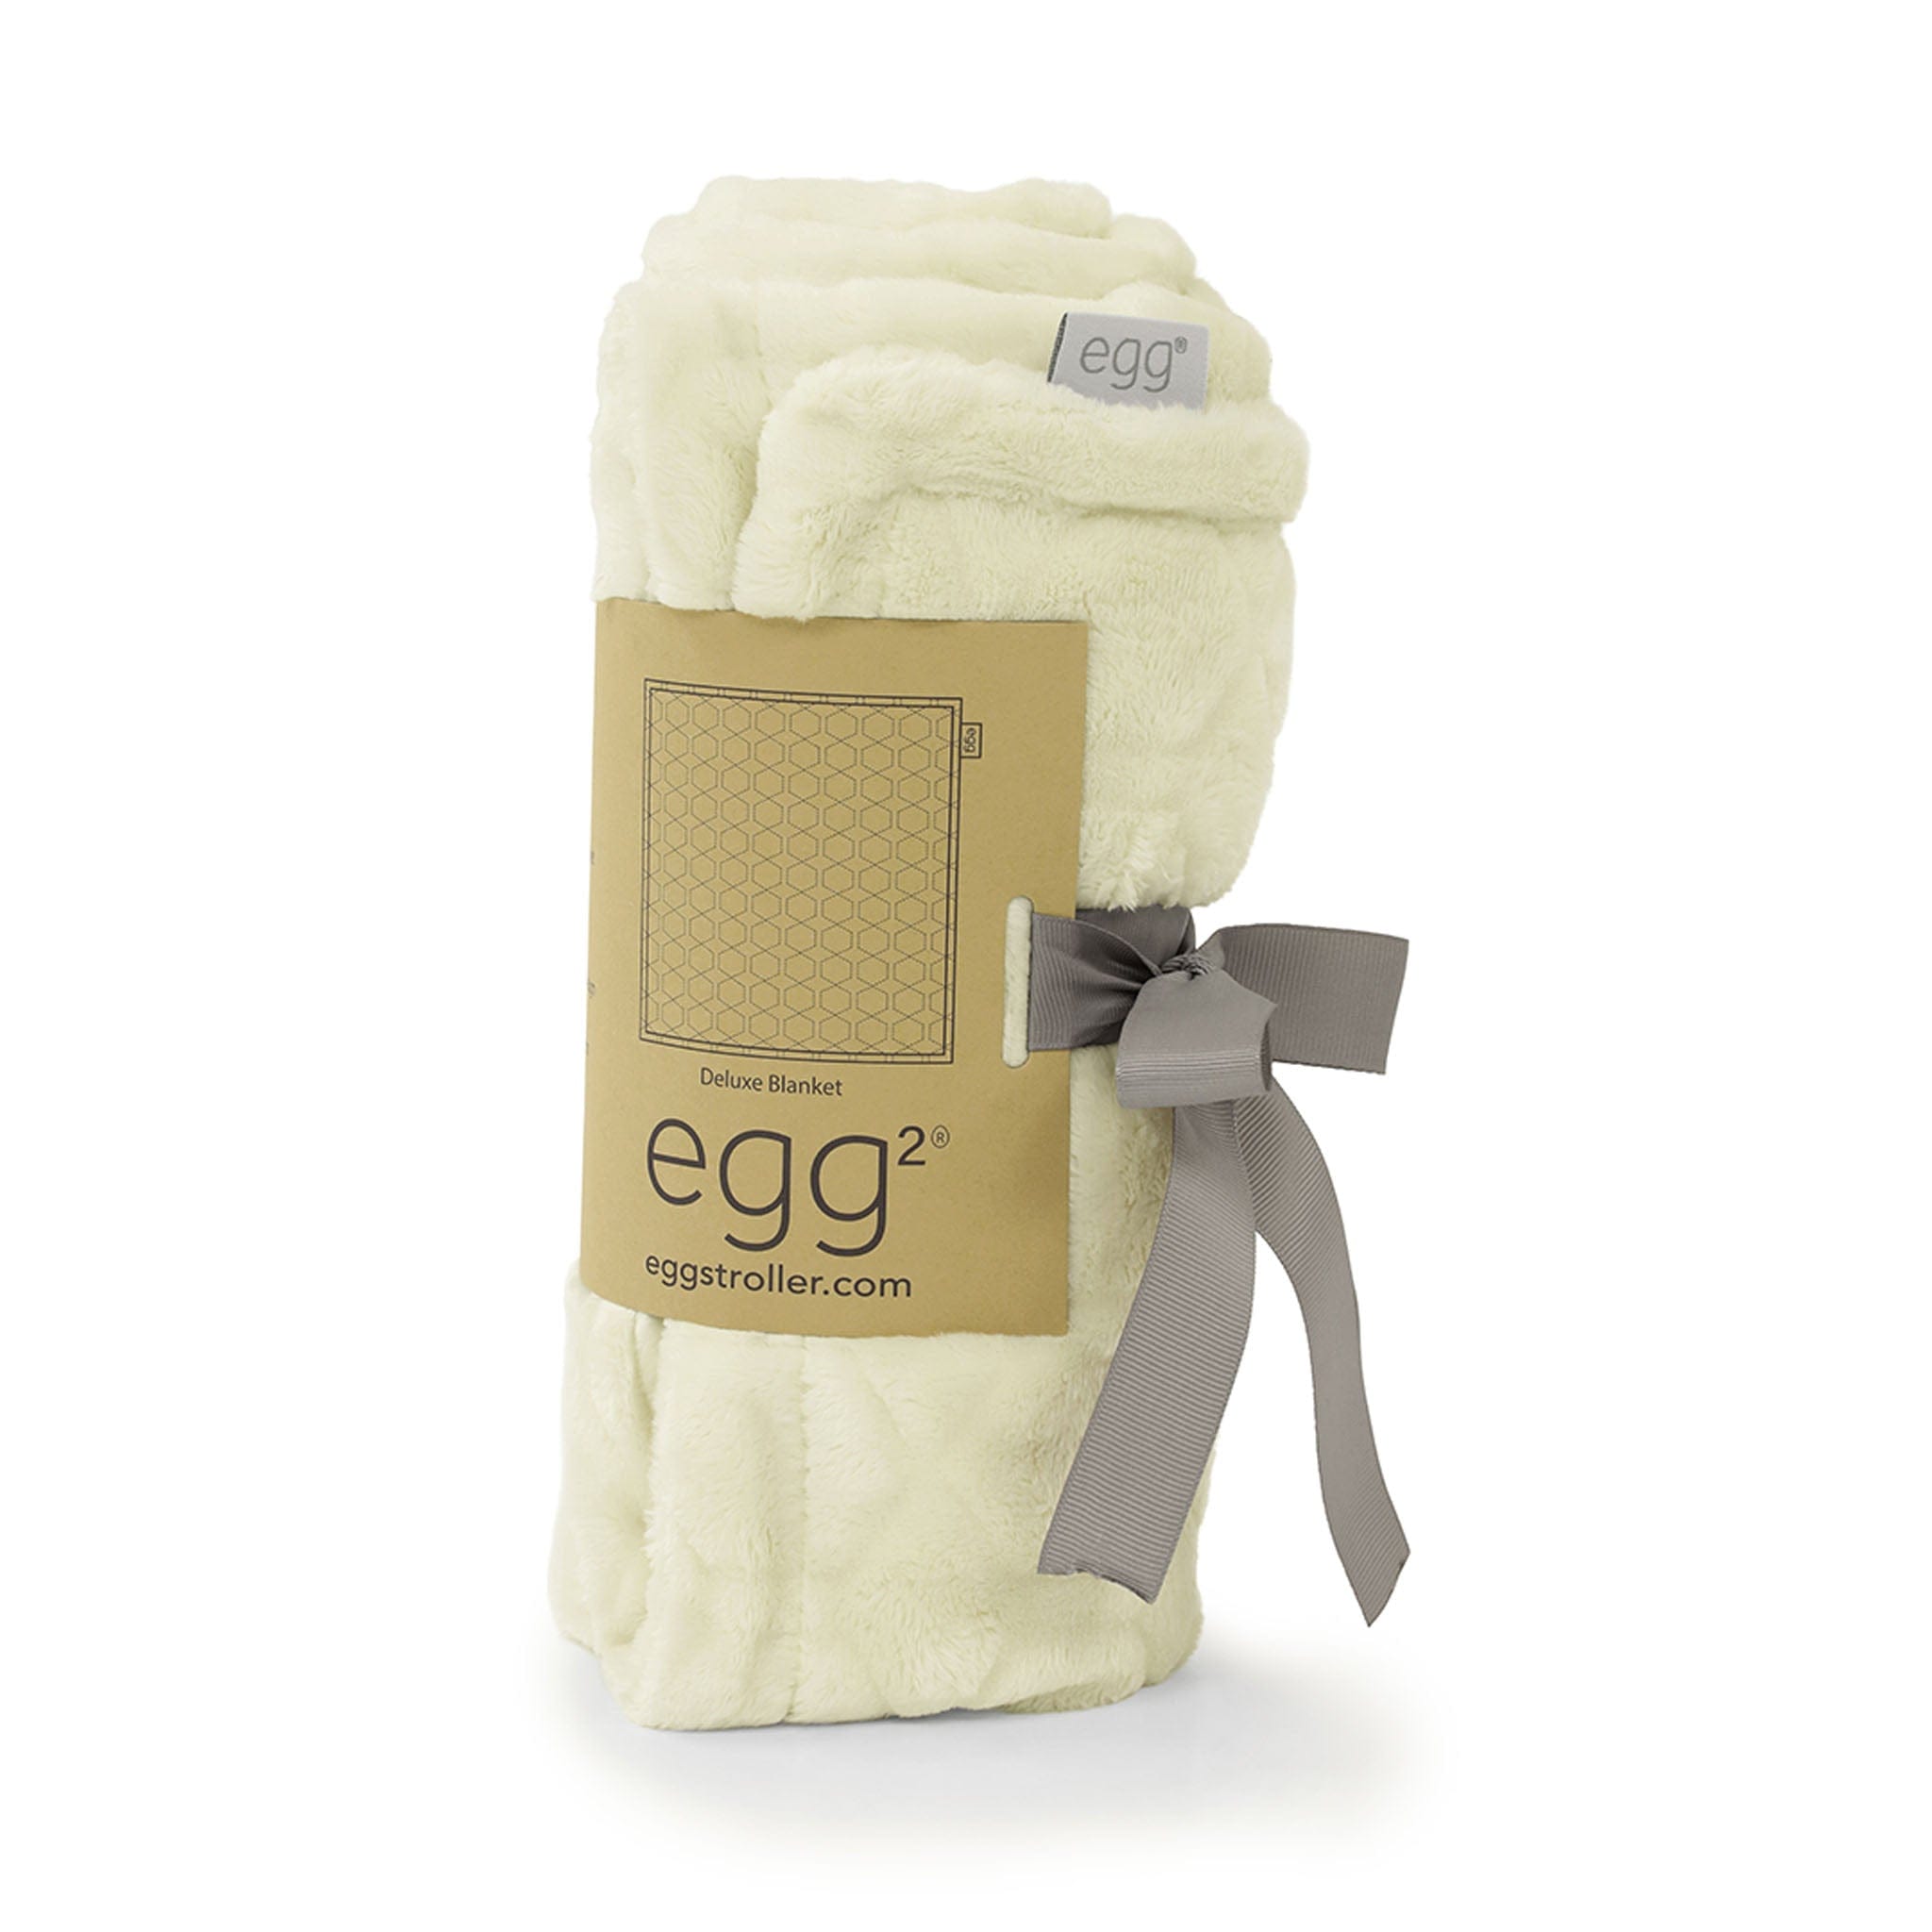 egg2 Deluxe Blanket in Cream Footmuffs & Liners